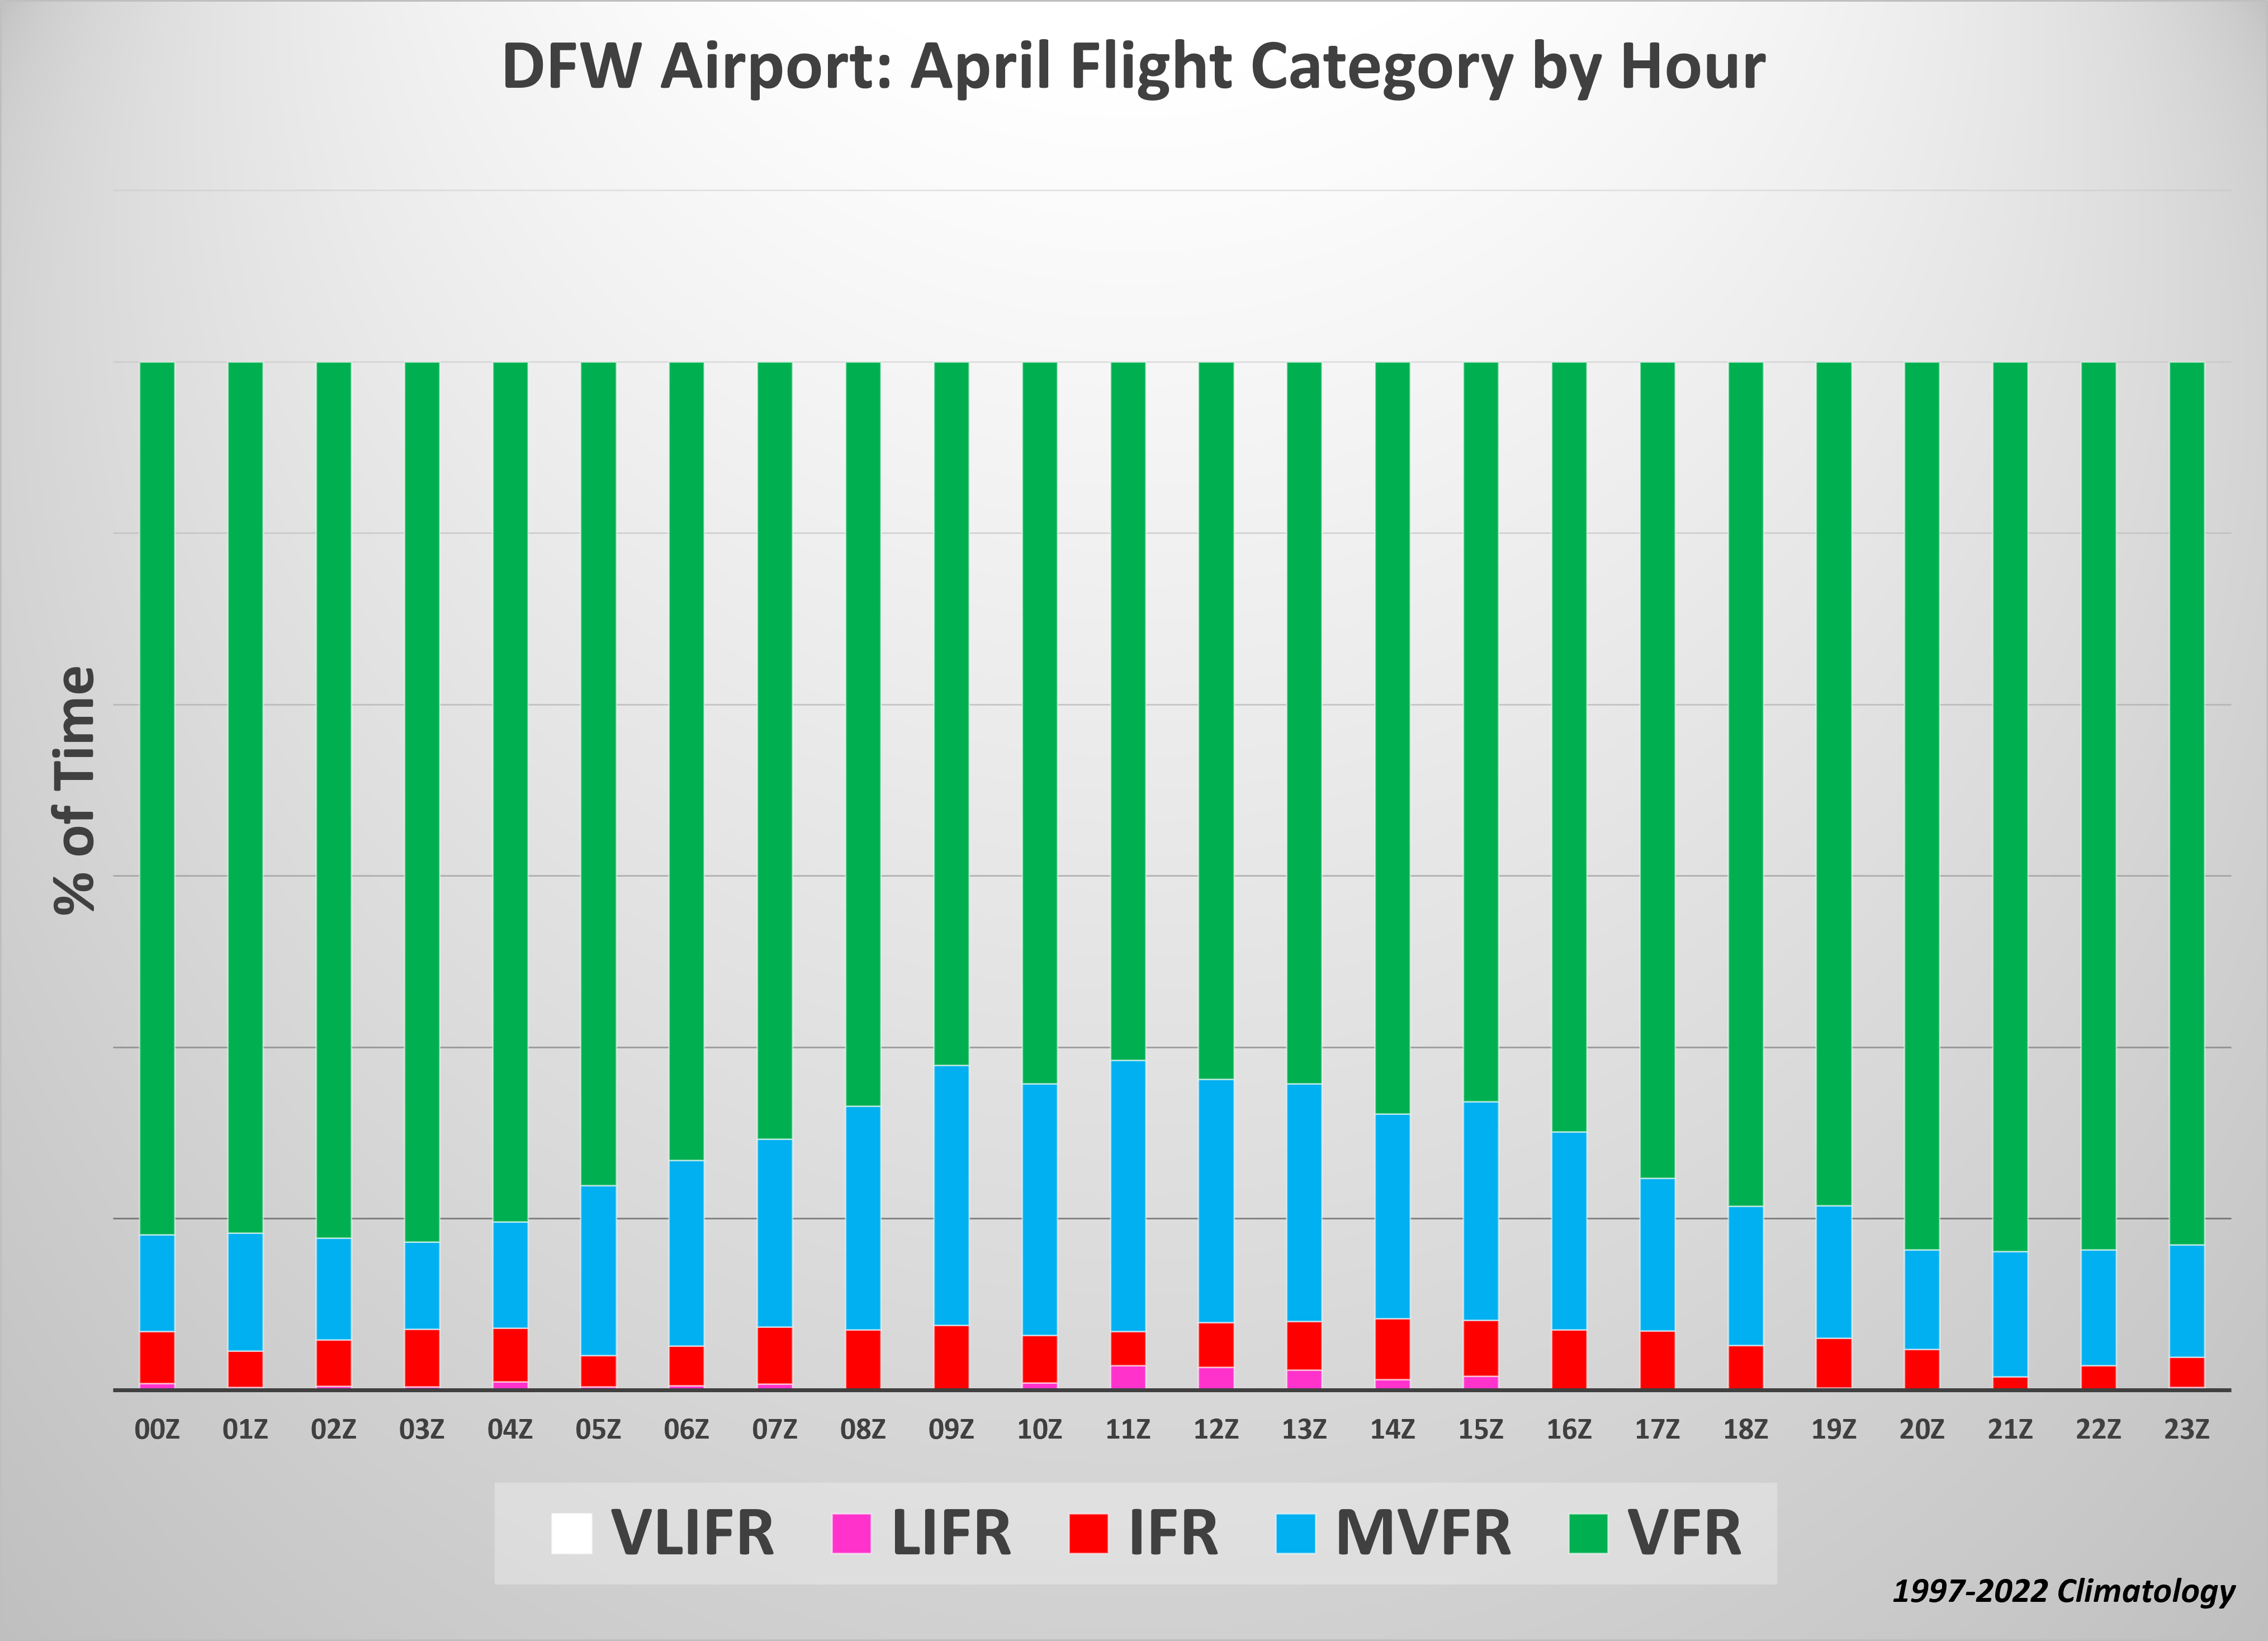 DFW Airport - April Flight Categories by Hour